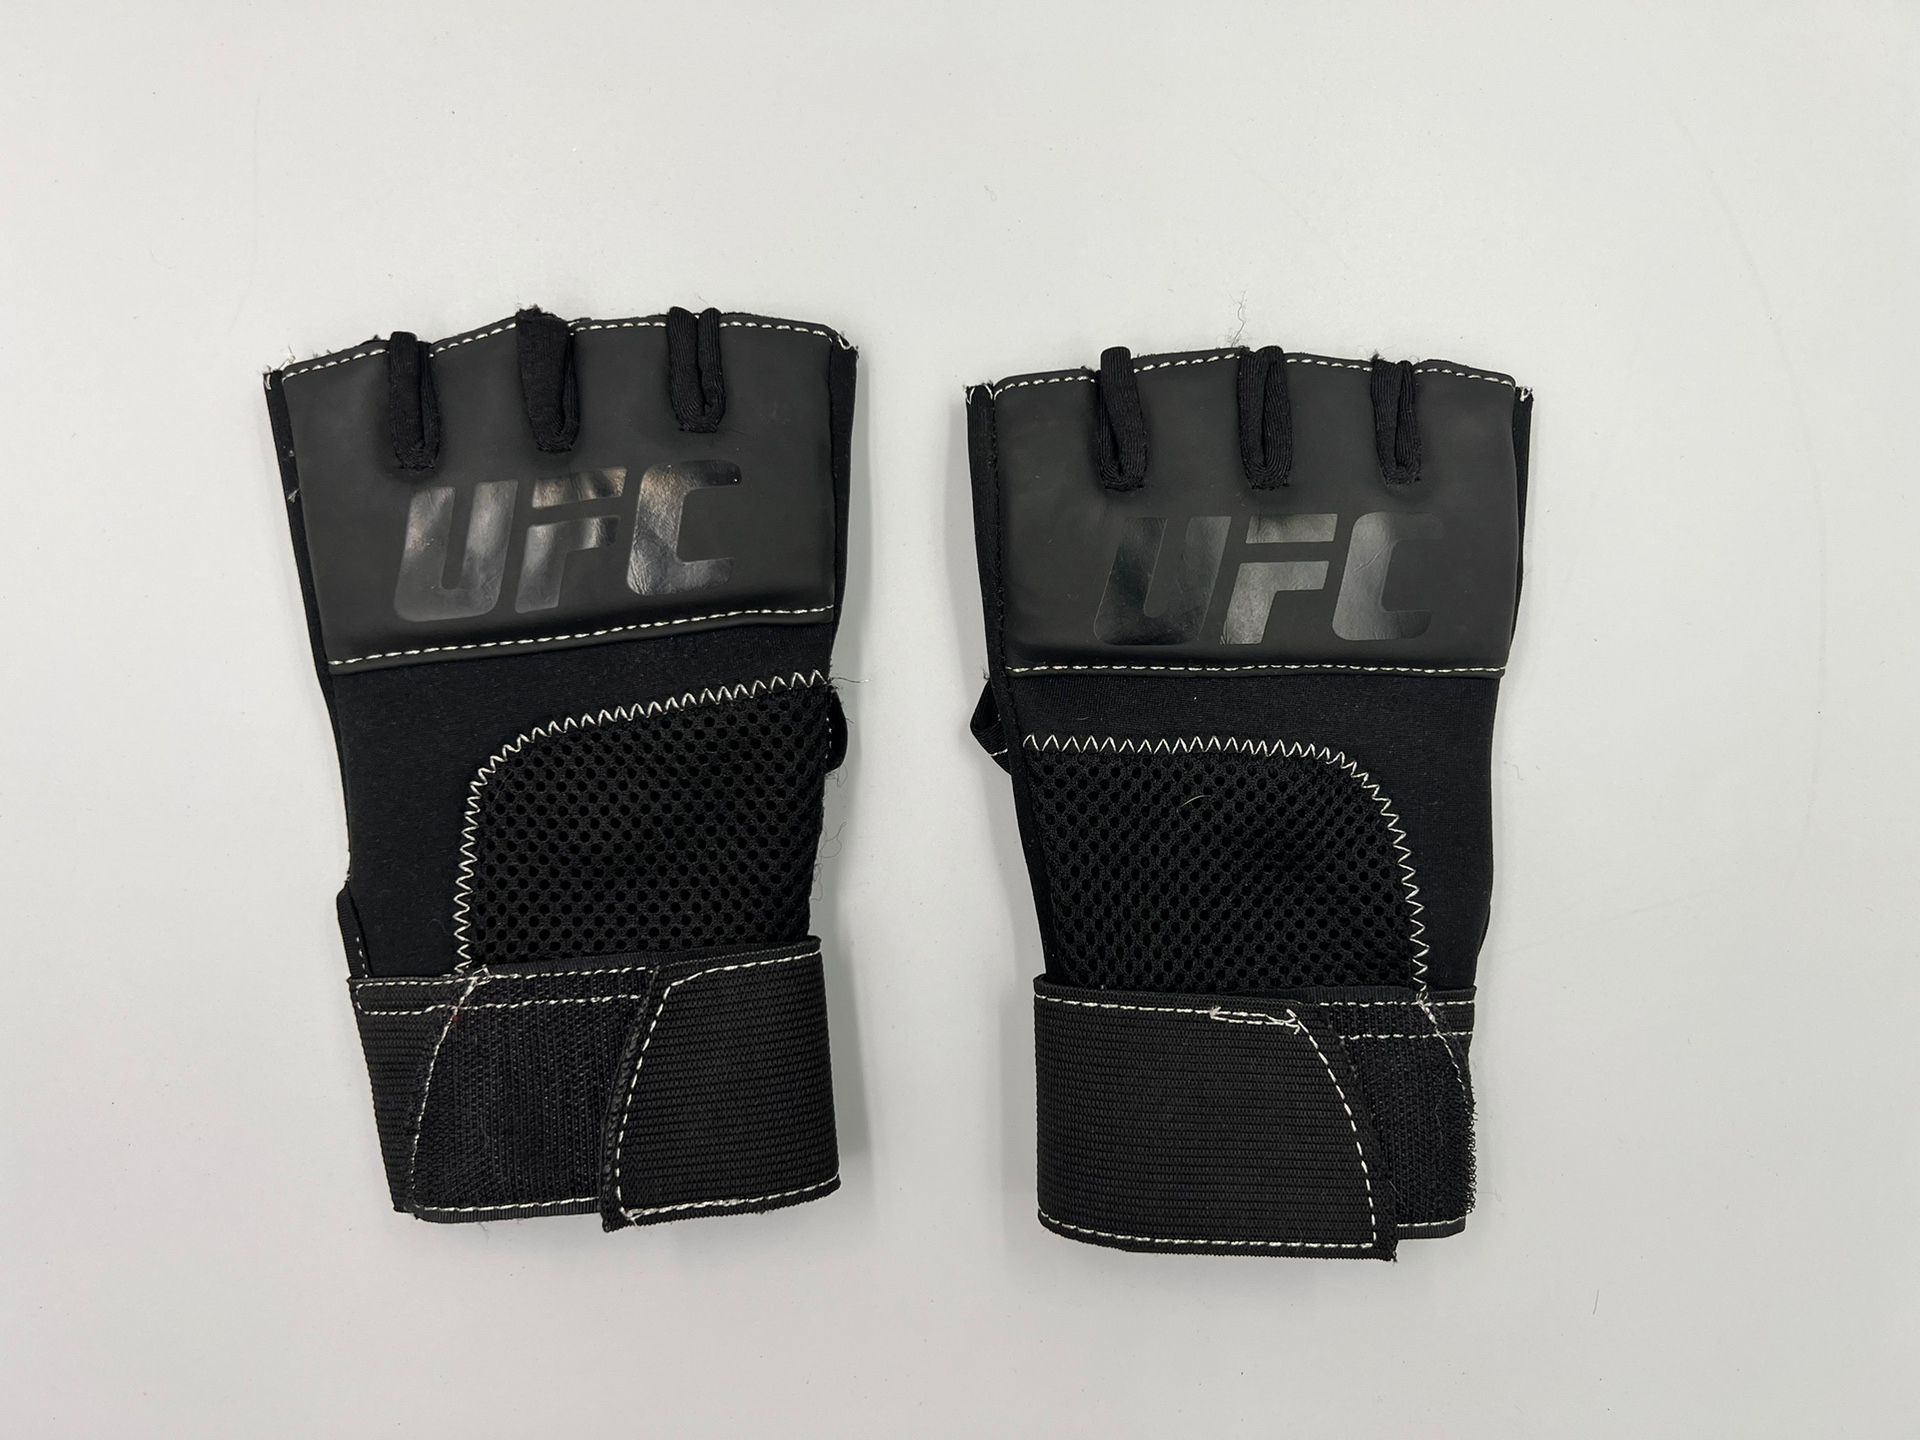 UFC Practice -Training Gloves Black S/M